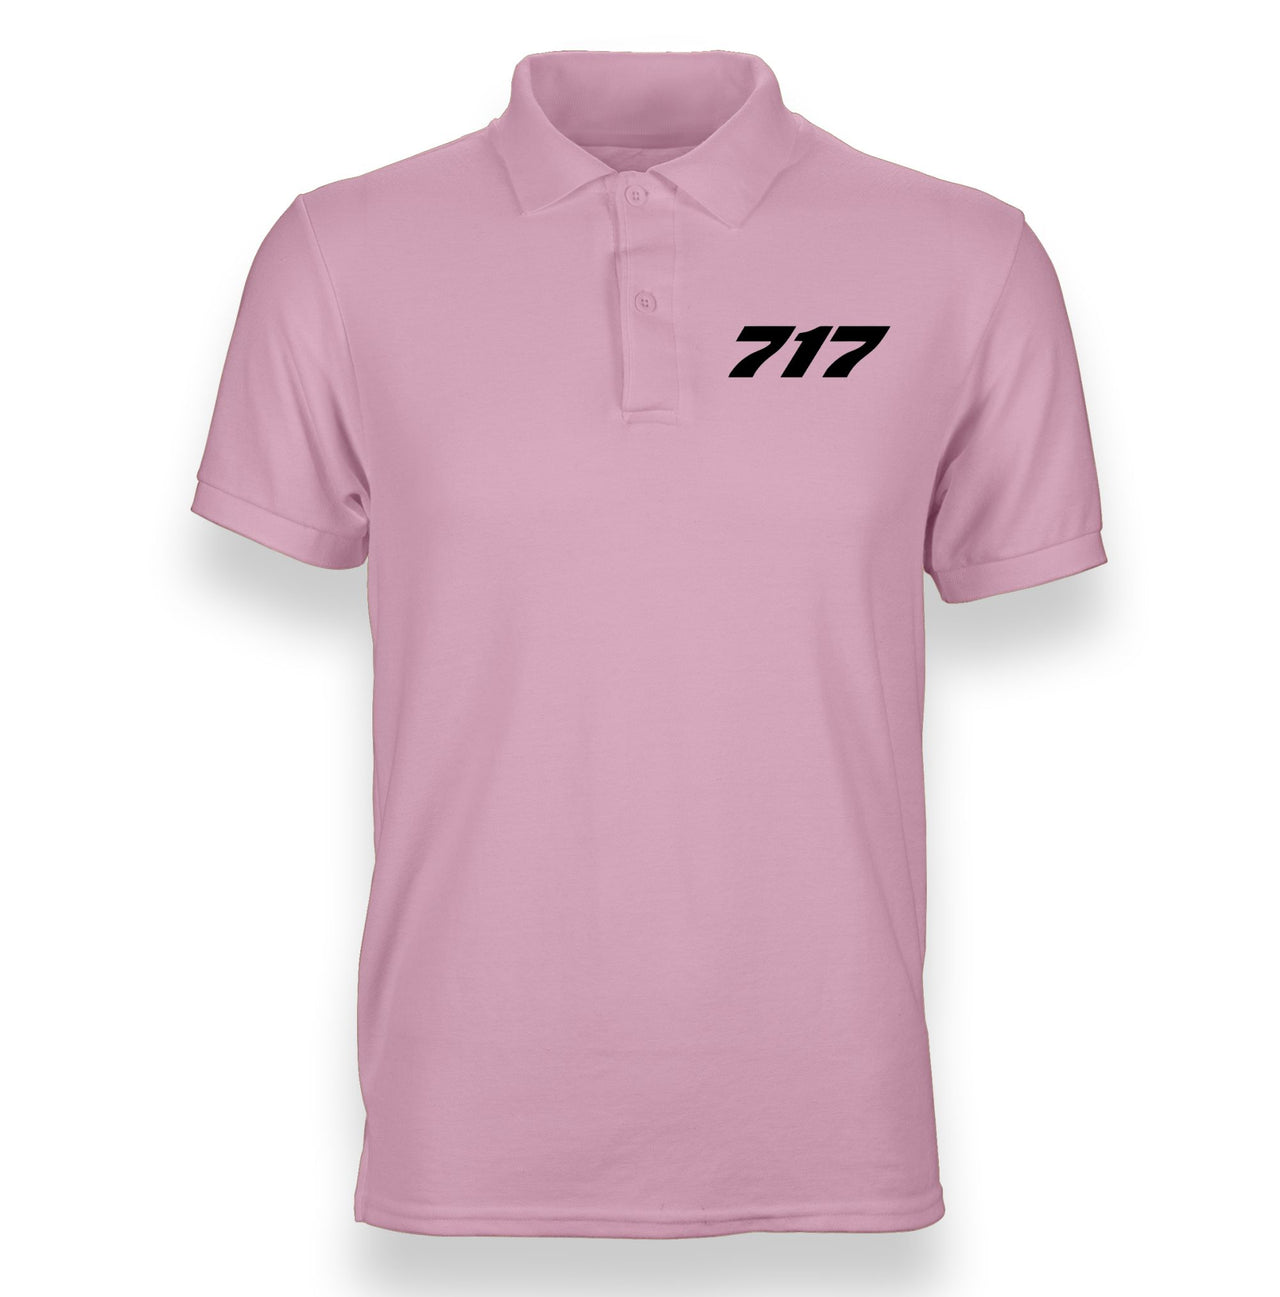 717 Flat Text Designed "WOMEN" Polo T-Shirts